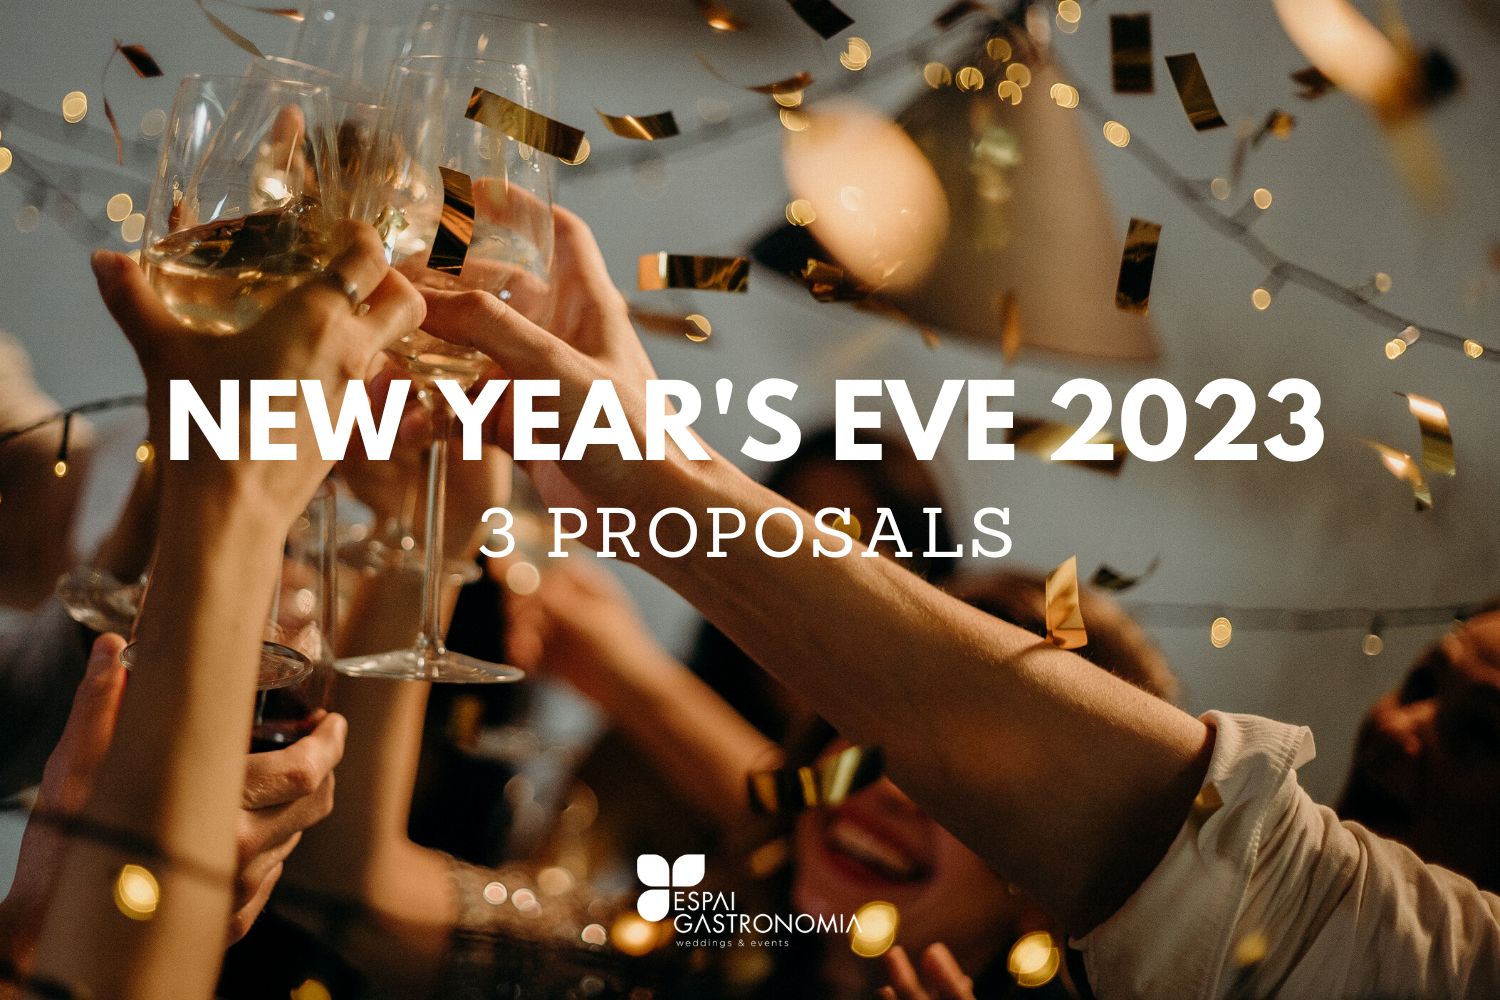 New Year's Eve 2023 In Igualada - Barcelona